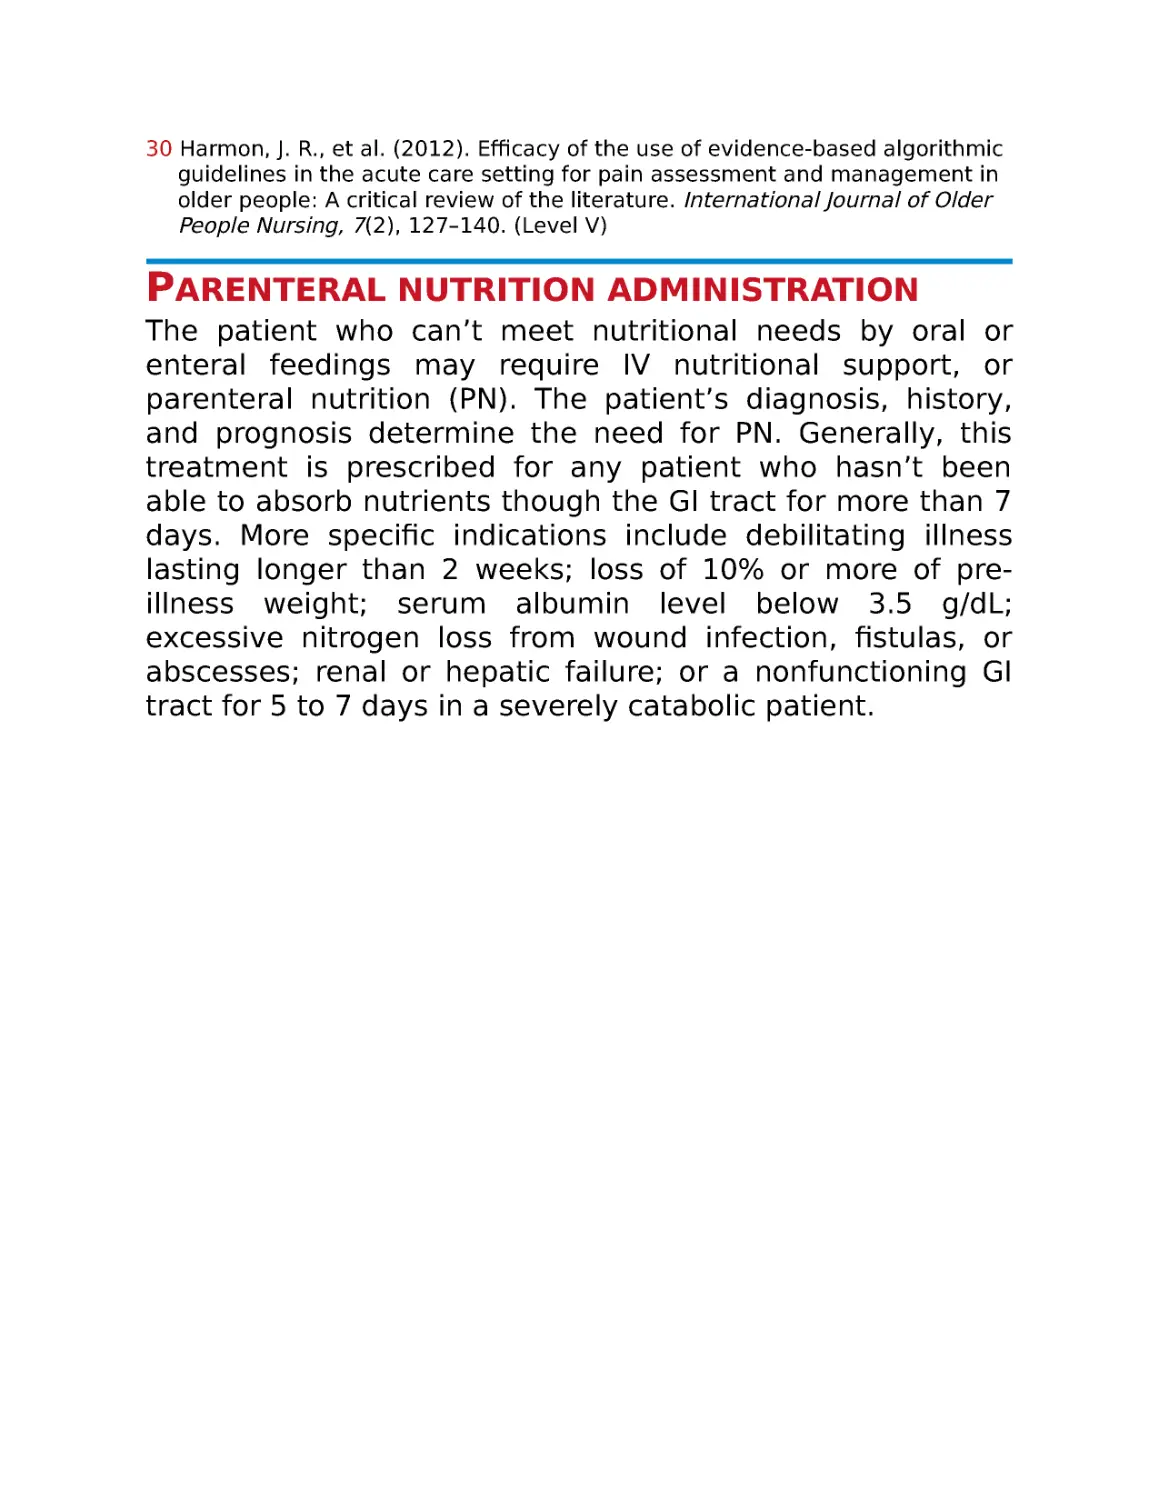 Parenteral nutrition administration